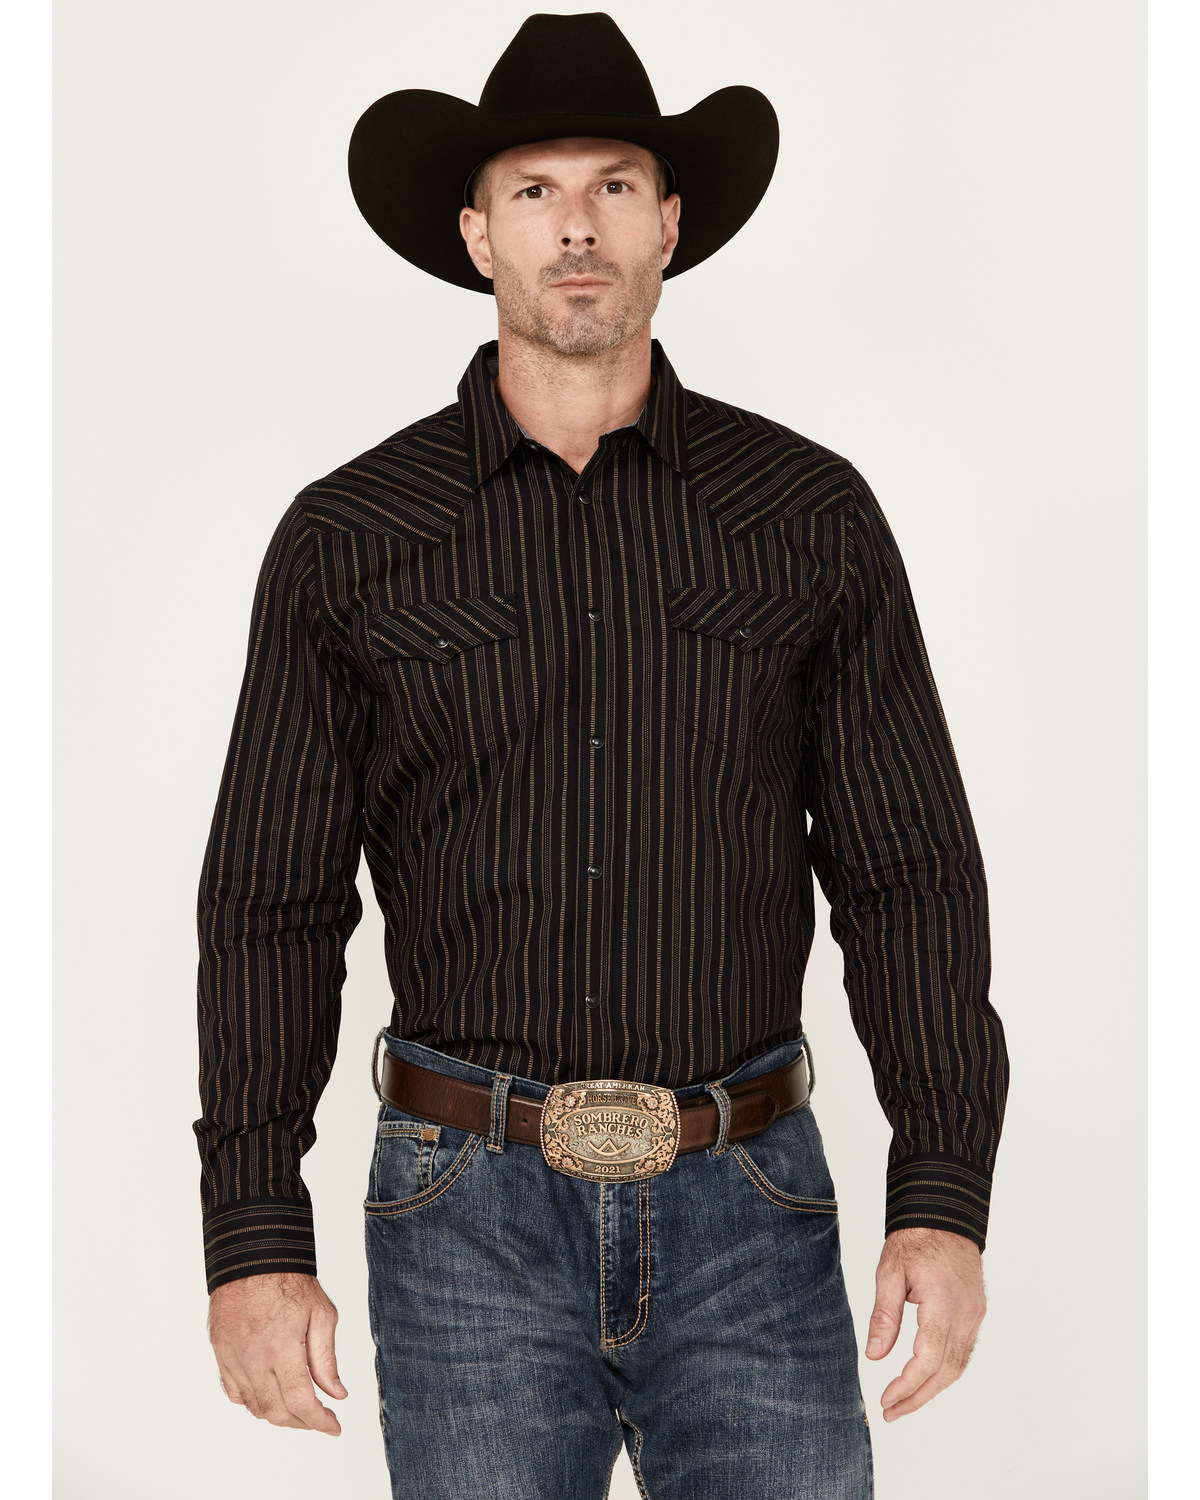 Cody James Men's Wrestler Striped Print Long Sleeve Snap Western Shirt